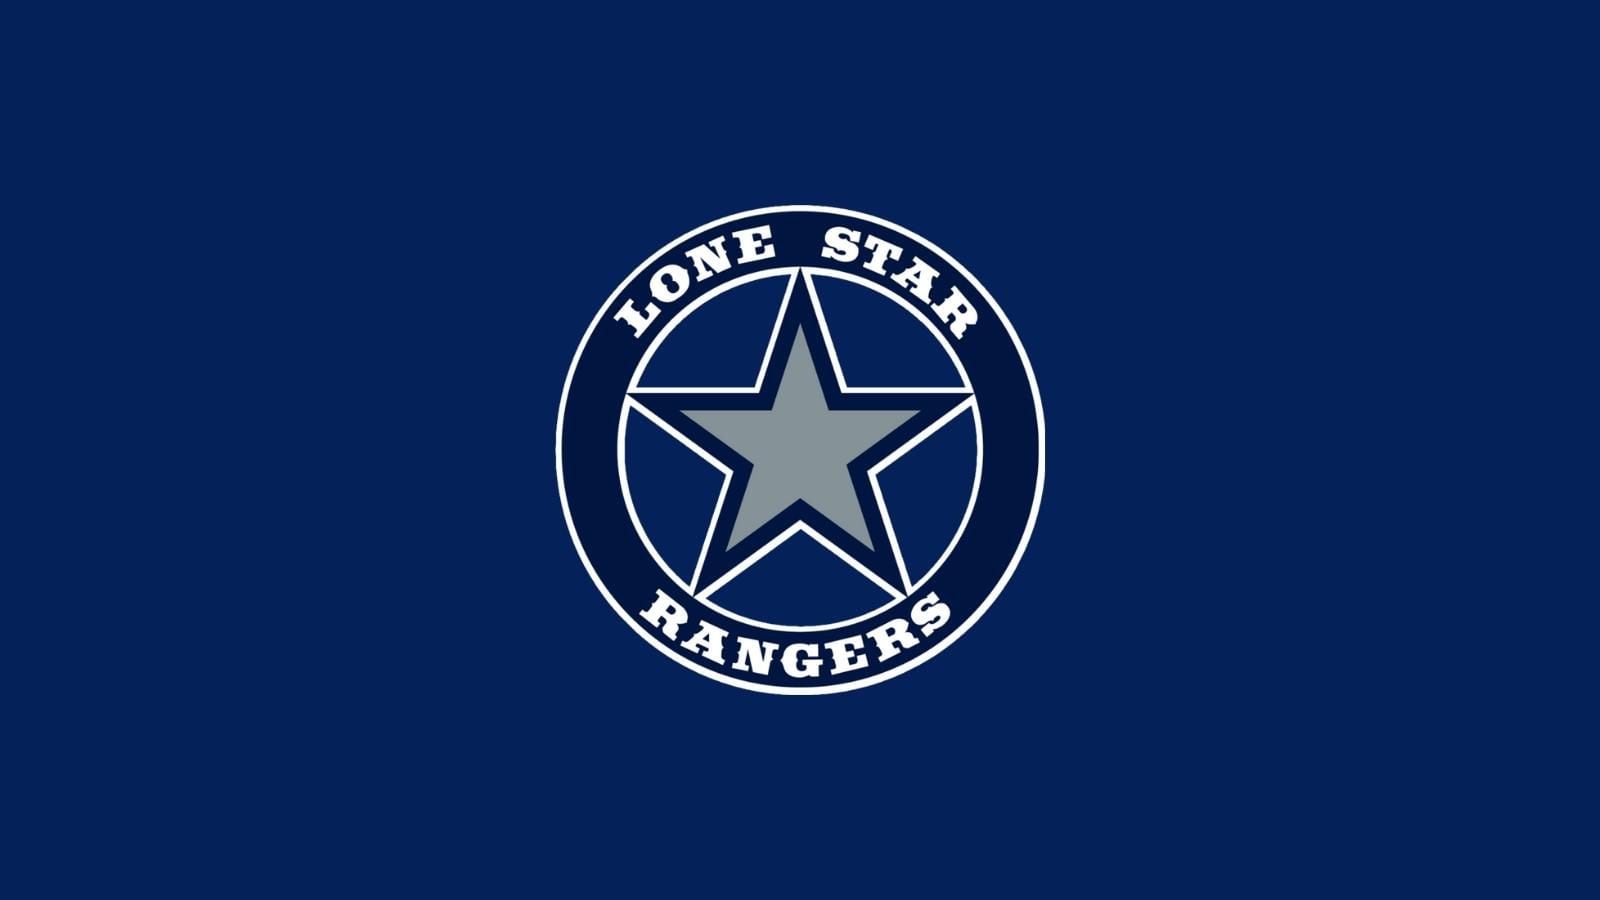 Frisco Lone Star logo.